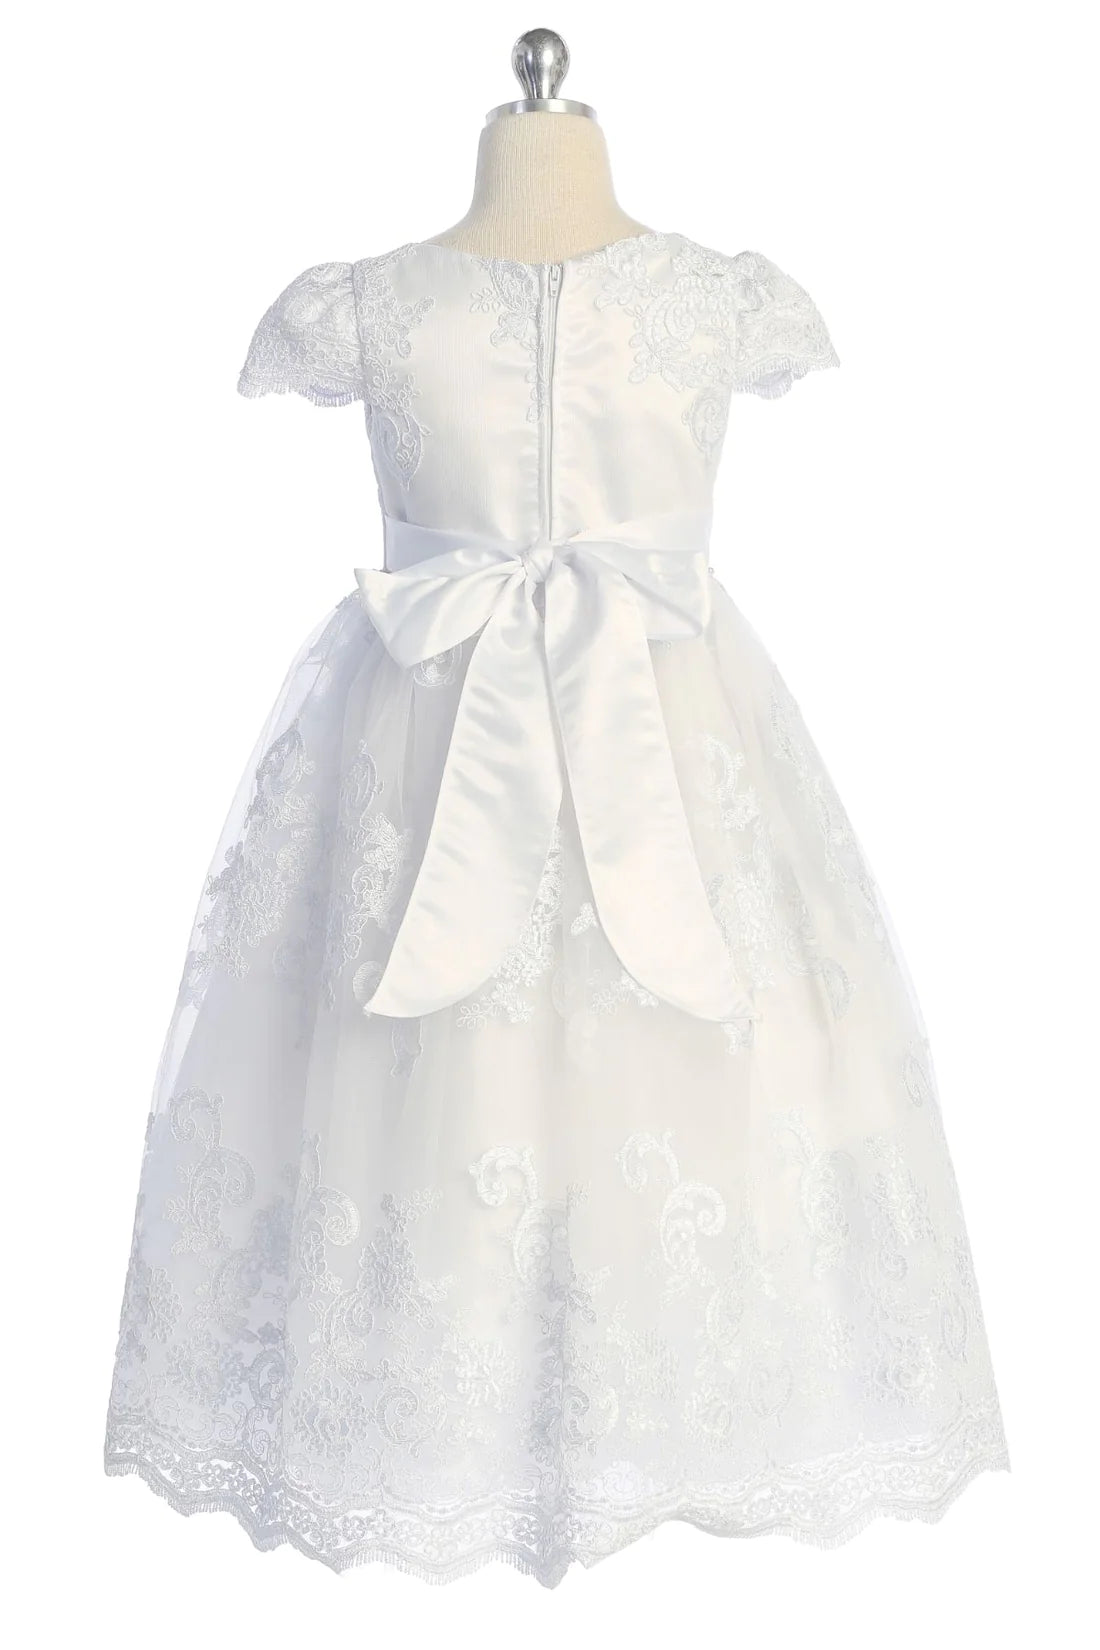 KD554- Cording Embellished Lace Sleeve Long Dress